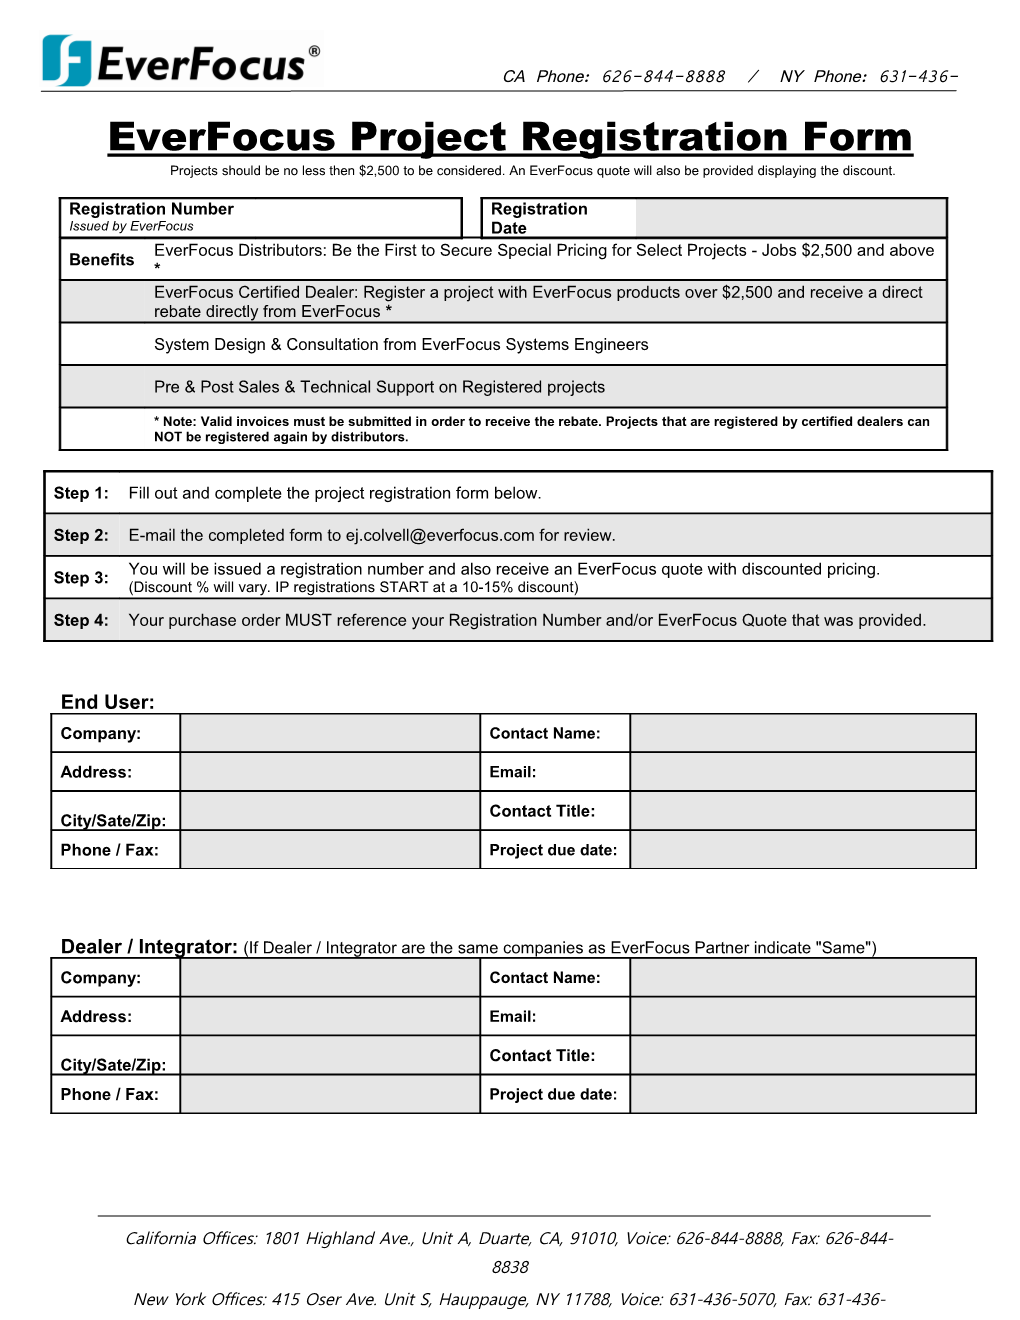 Everfocus Project Registration Form